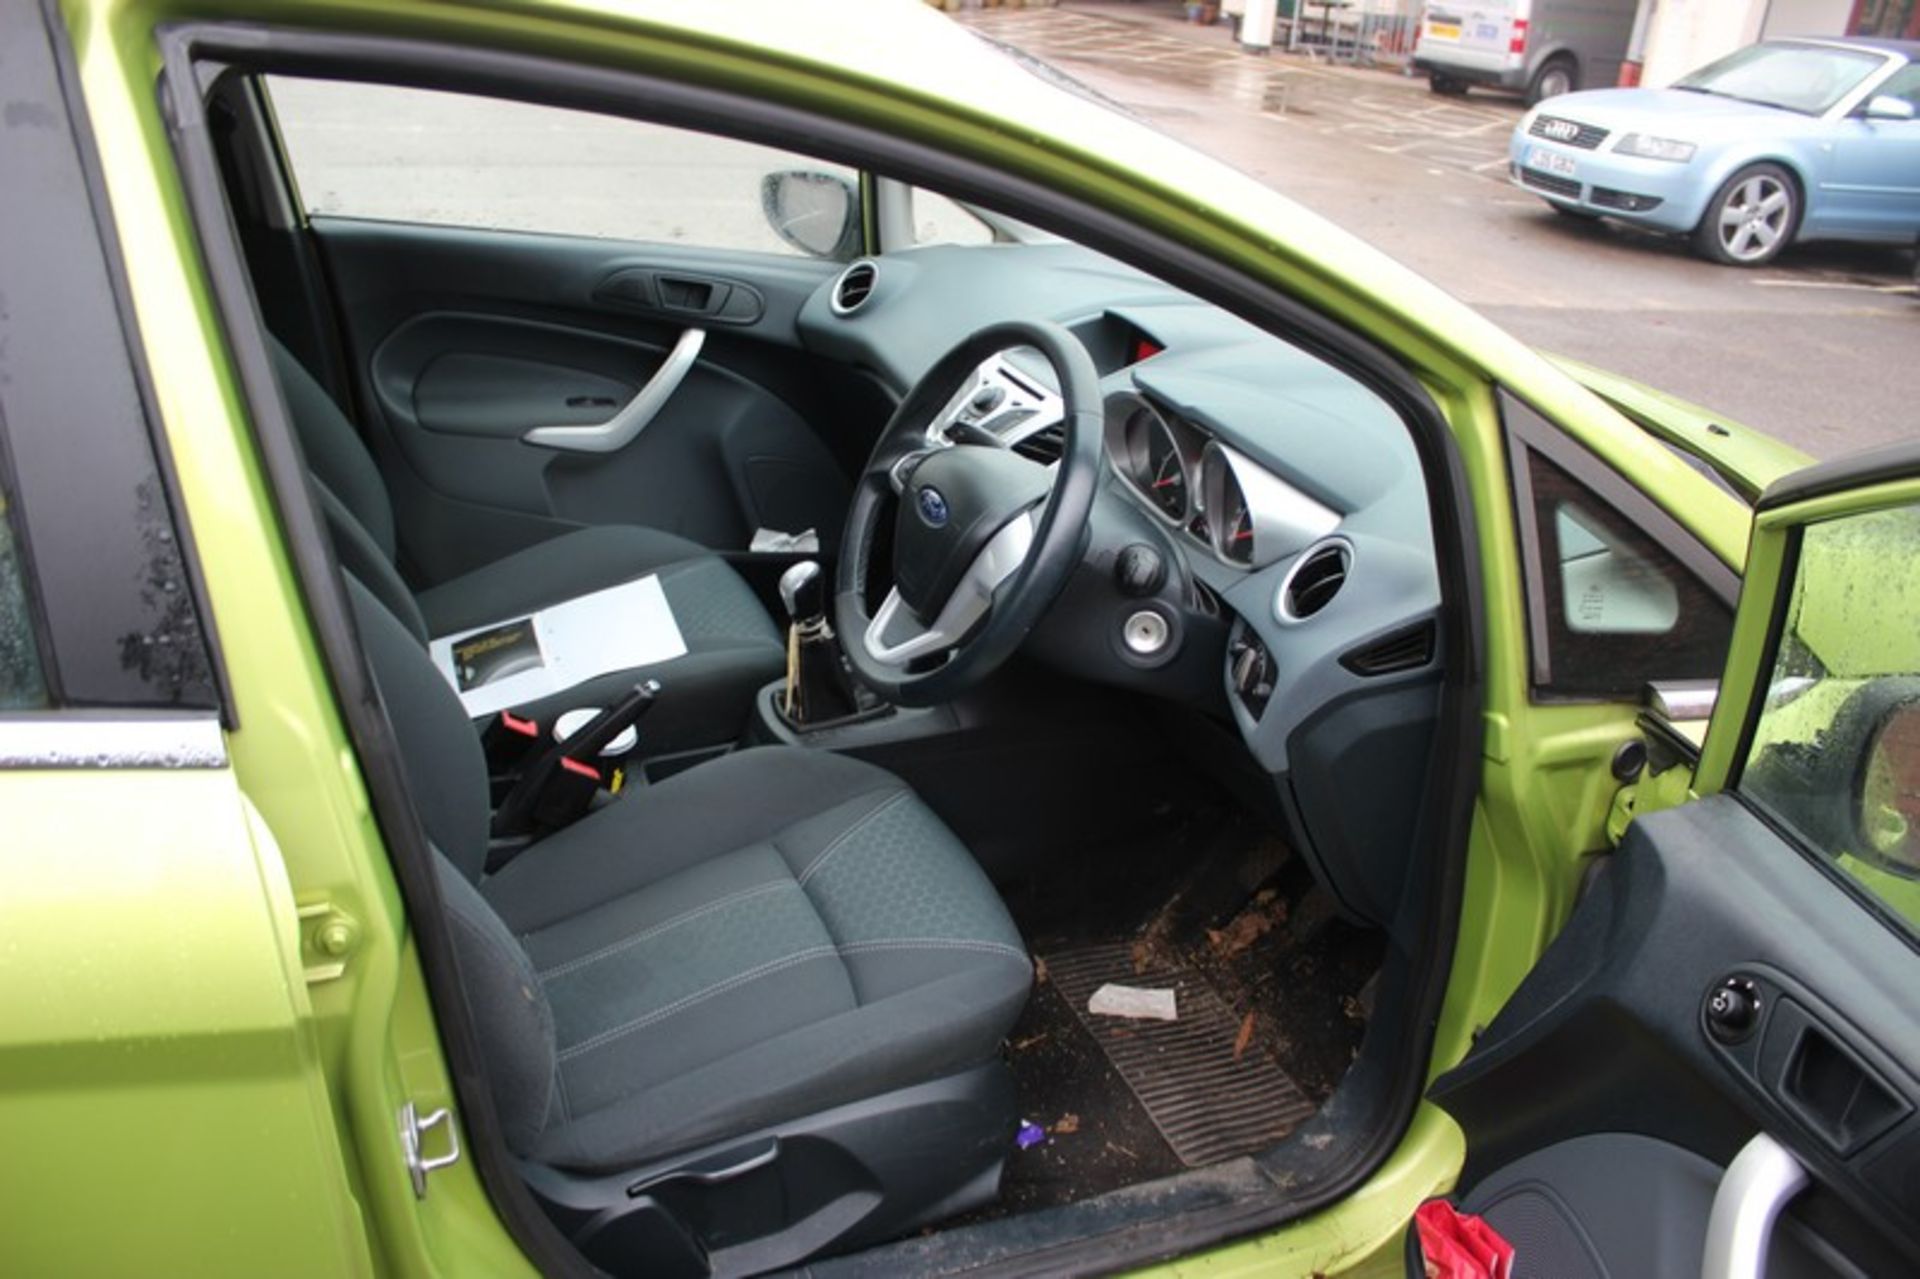 A 2009 Ford Fiesta Zetec 90 TDCI five door hatchback, registration number LL09 PBF, 1560cc, - Image 4 of 9